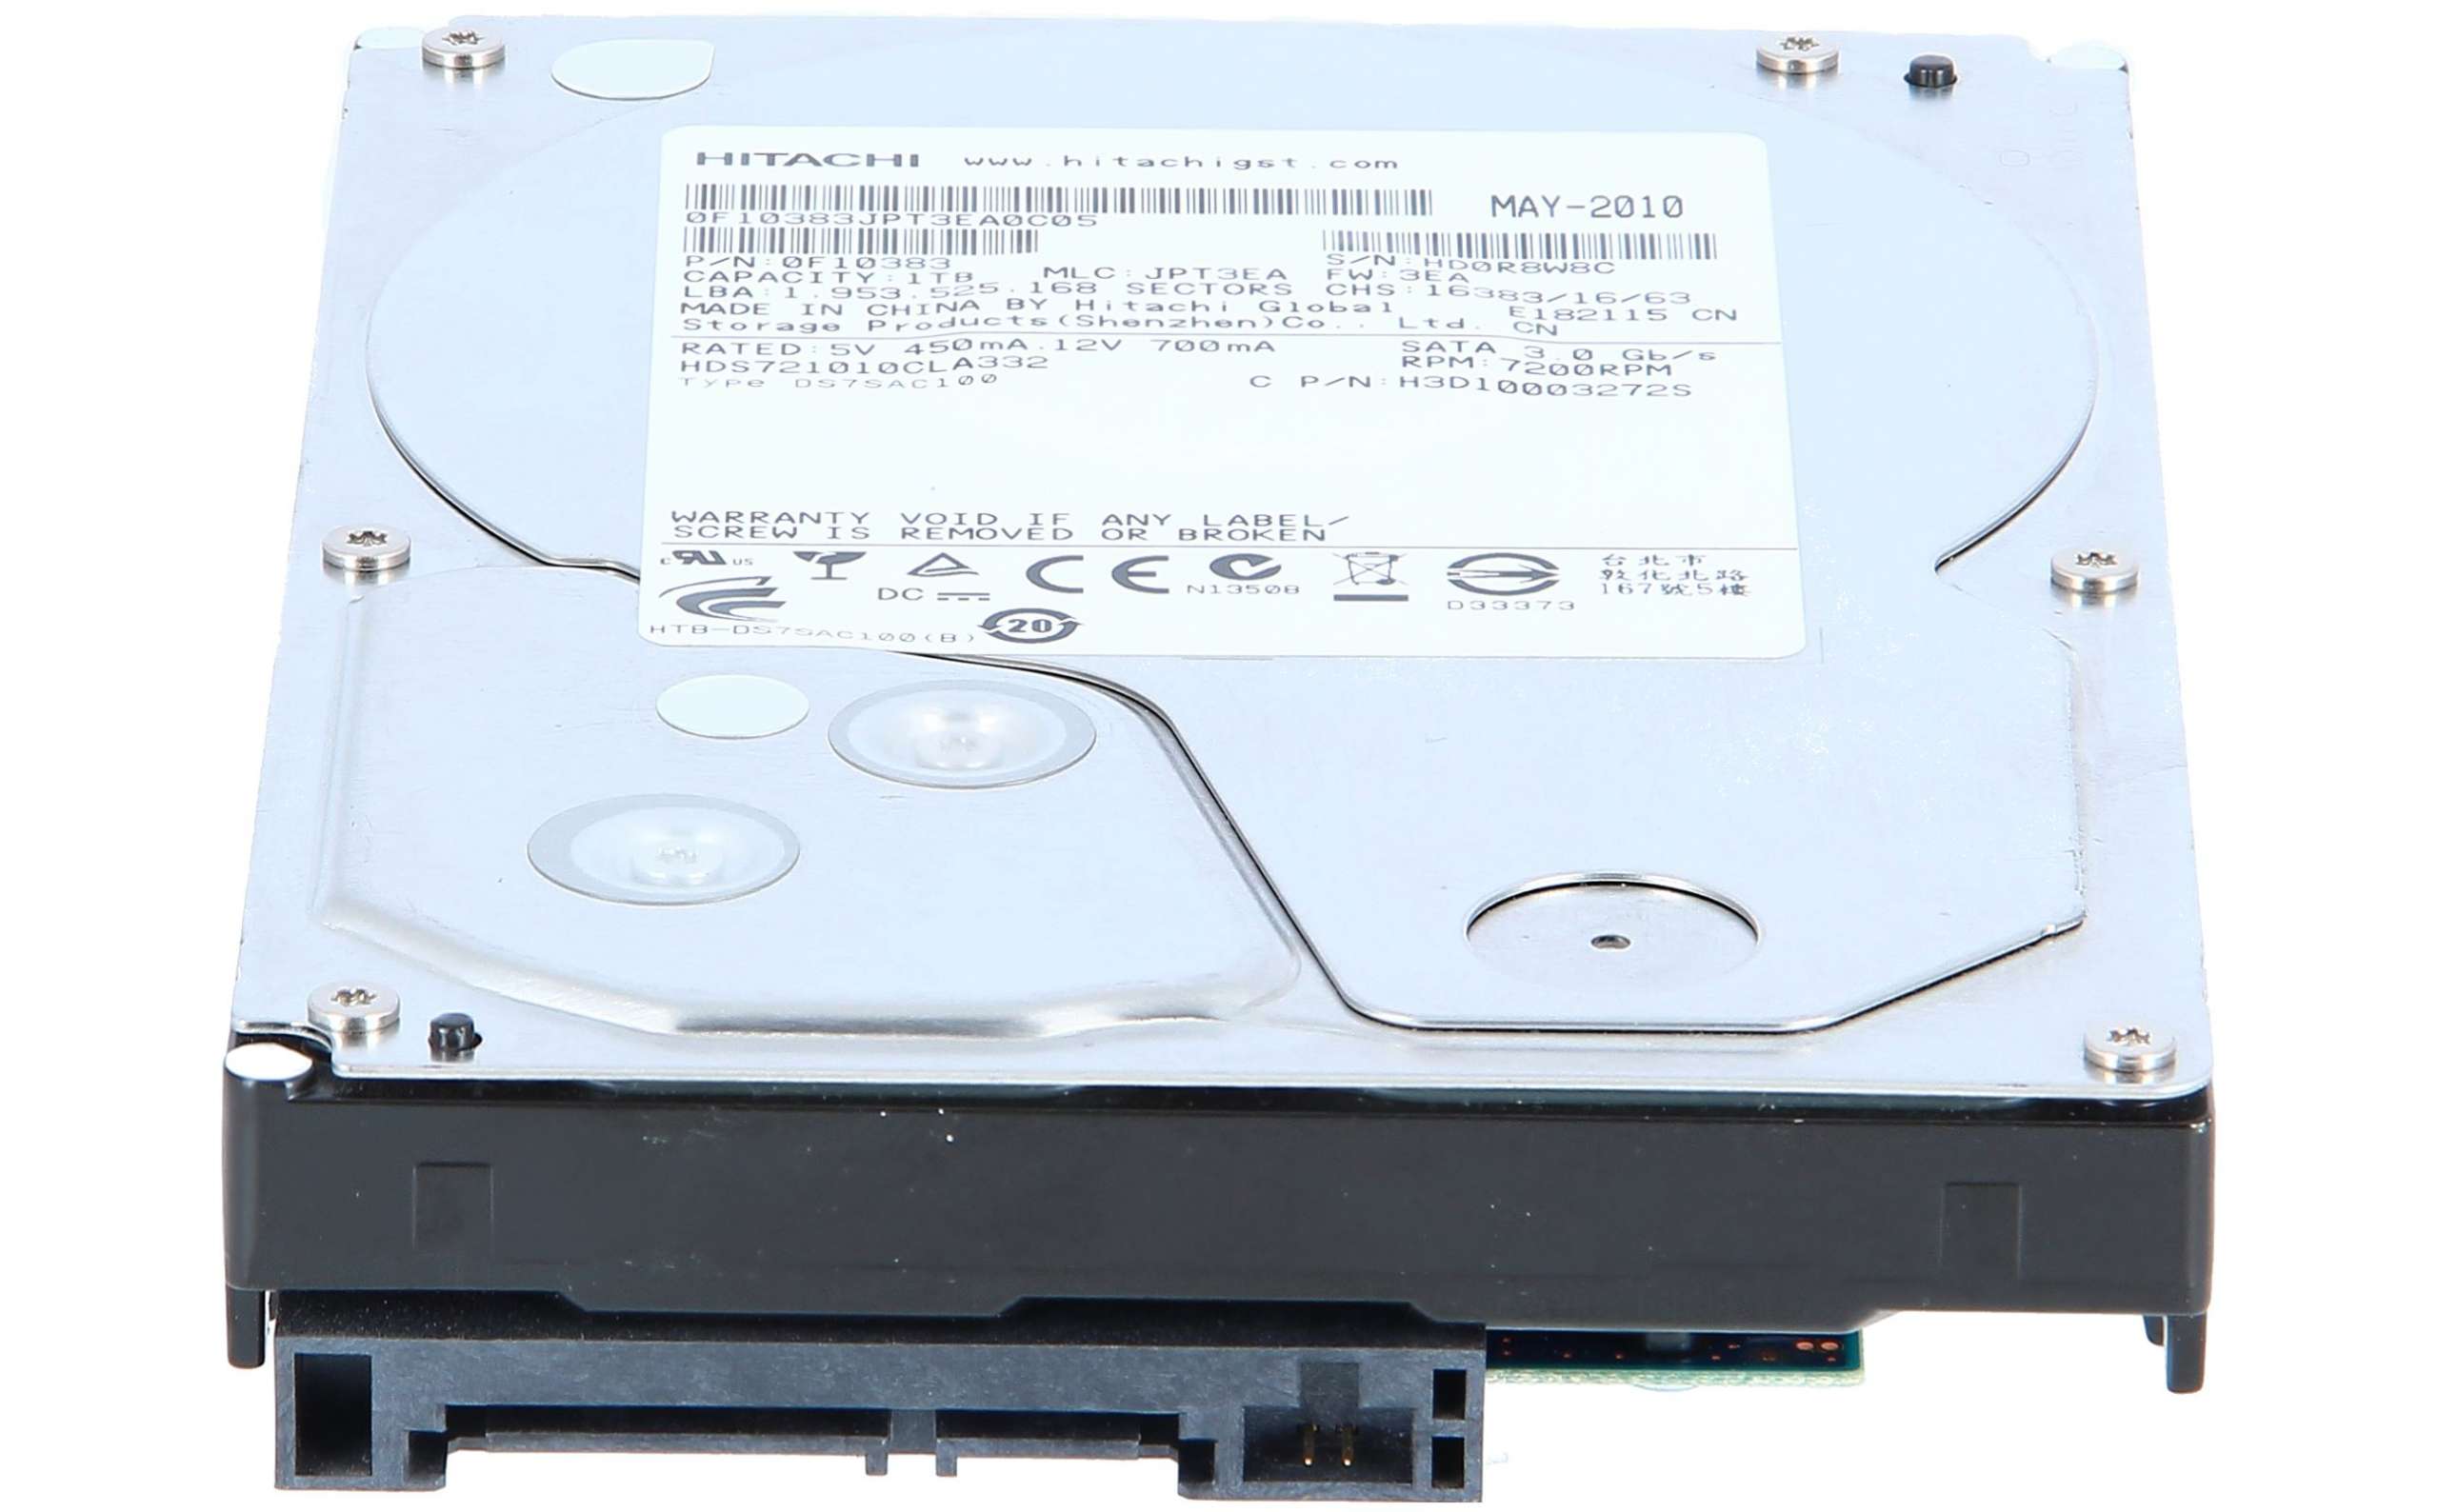 Hitachi SATA HDD 1TB HDS721010CLA332 - 内蔵型ハードディスクドライブ